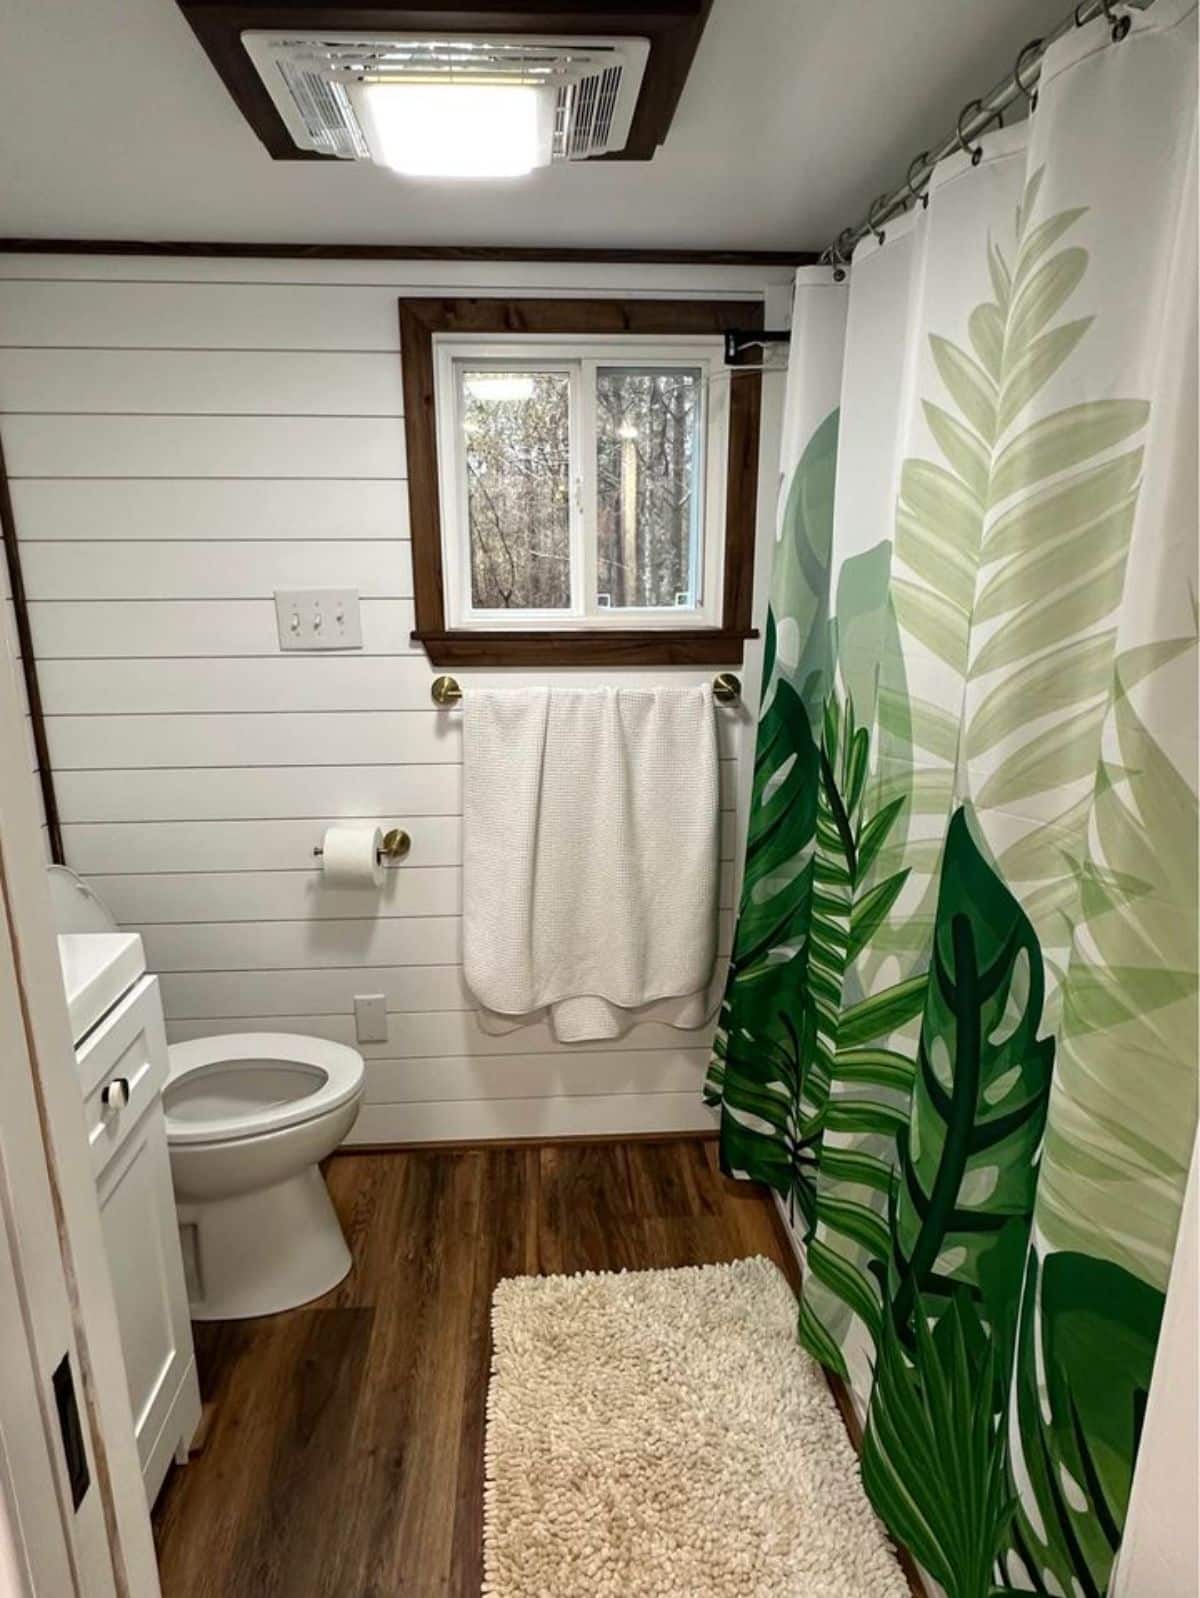 shower cum bath tub in bathroom of 3 bedroom tiny house